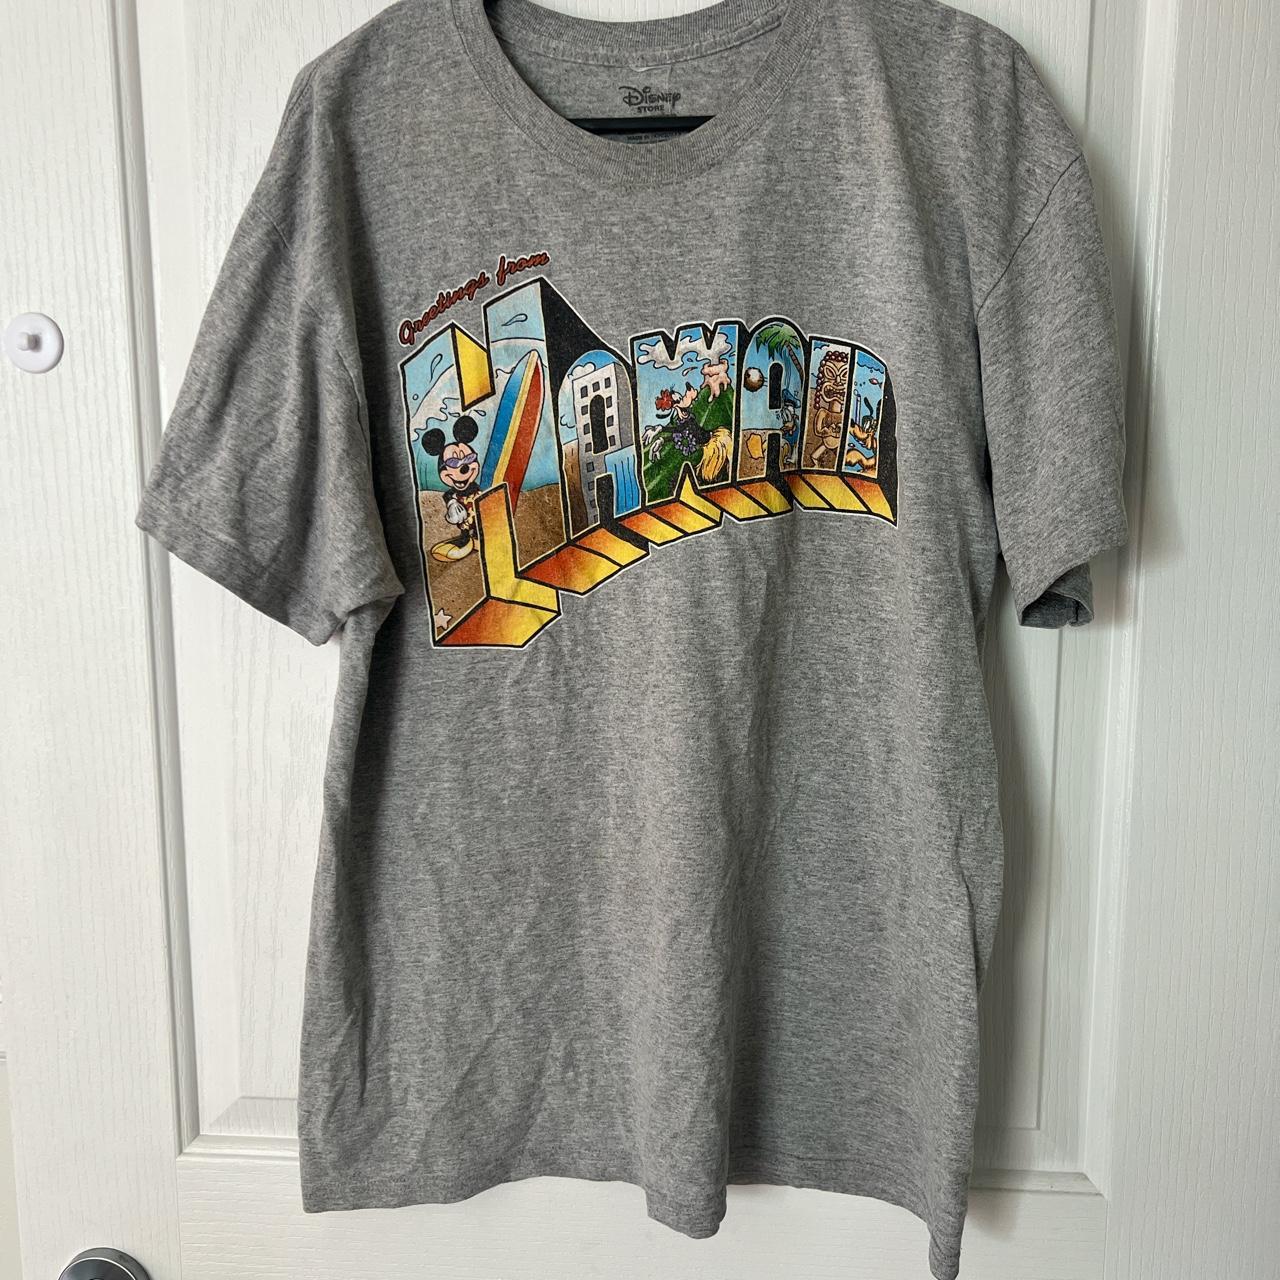 Vintage men’s Disney shirt - Depop